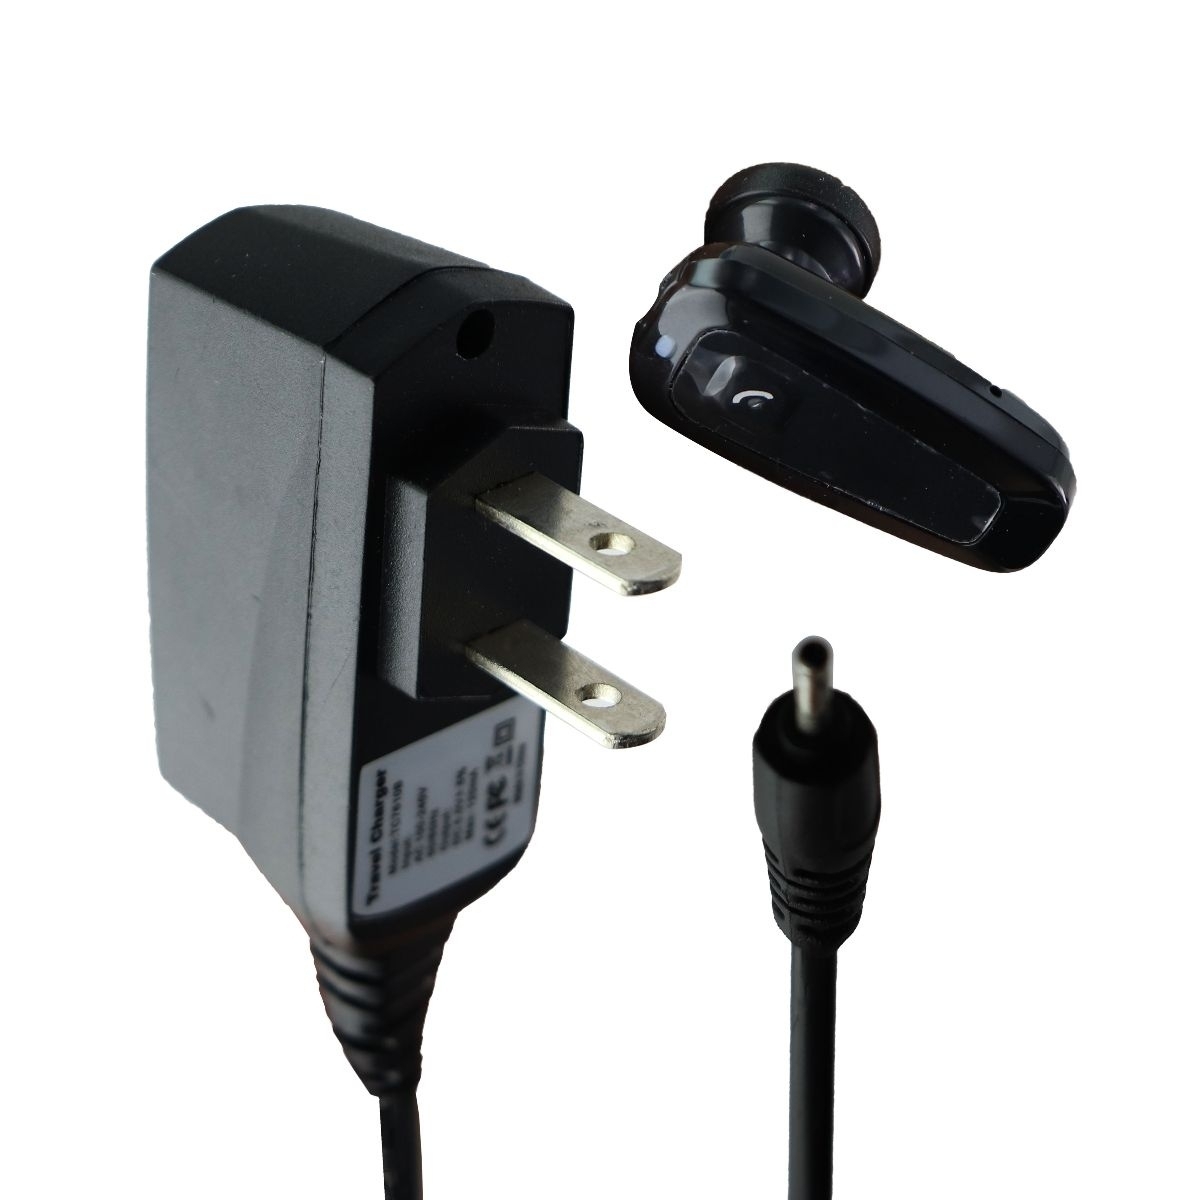 ECO Sound Engineering Wireless Bluetooth Headset - Black